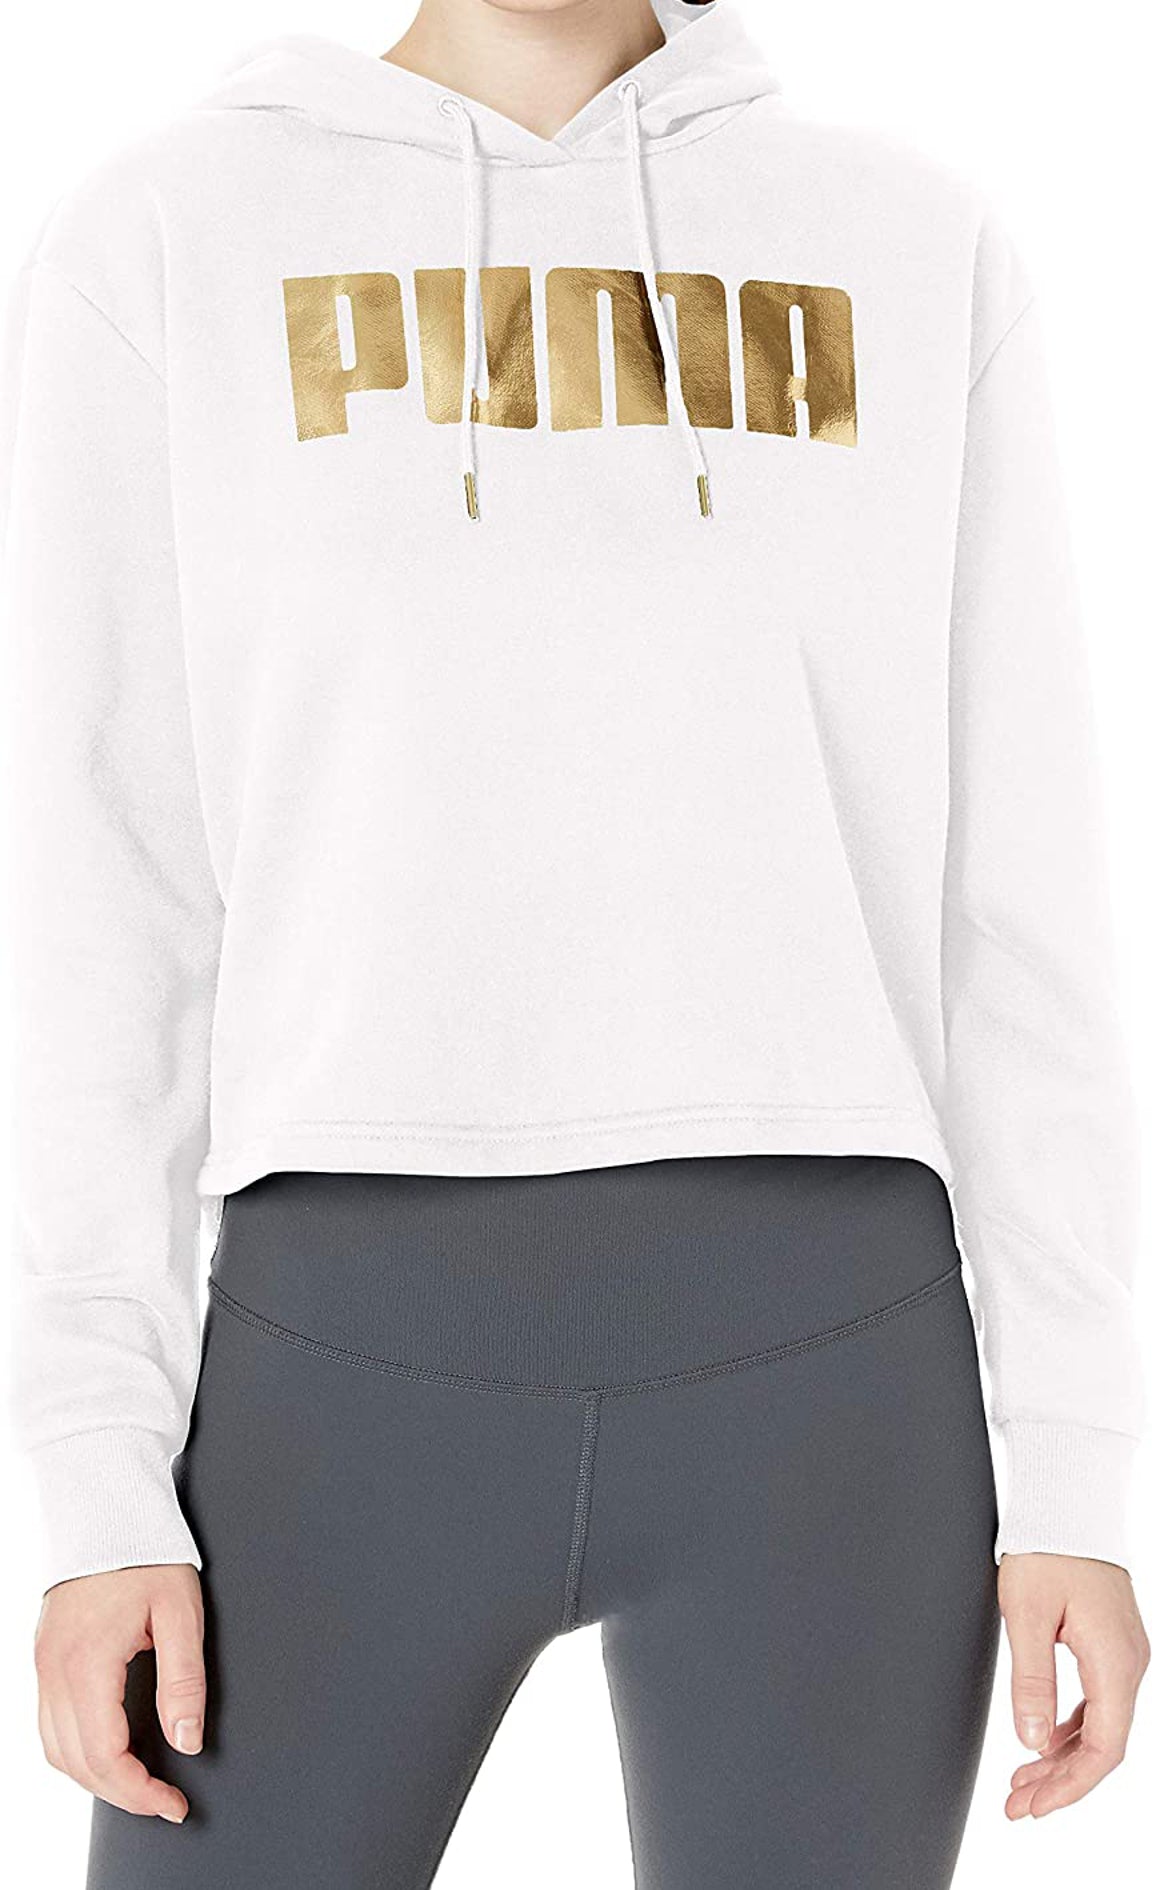 Puma Women's Metallic Logo Fleece Hoodie White Size XL - image 1 of 3